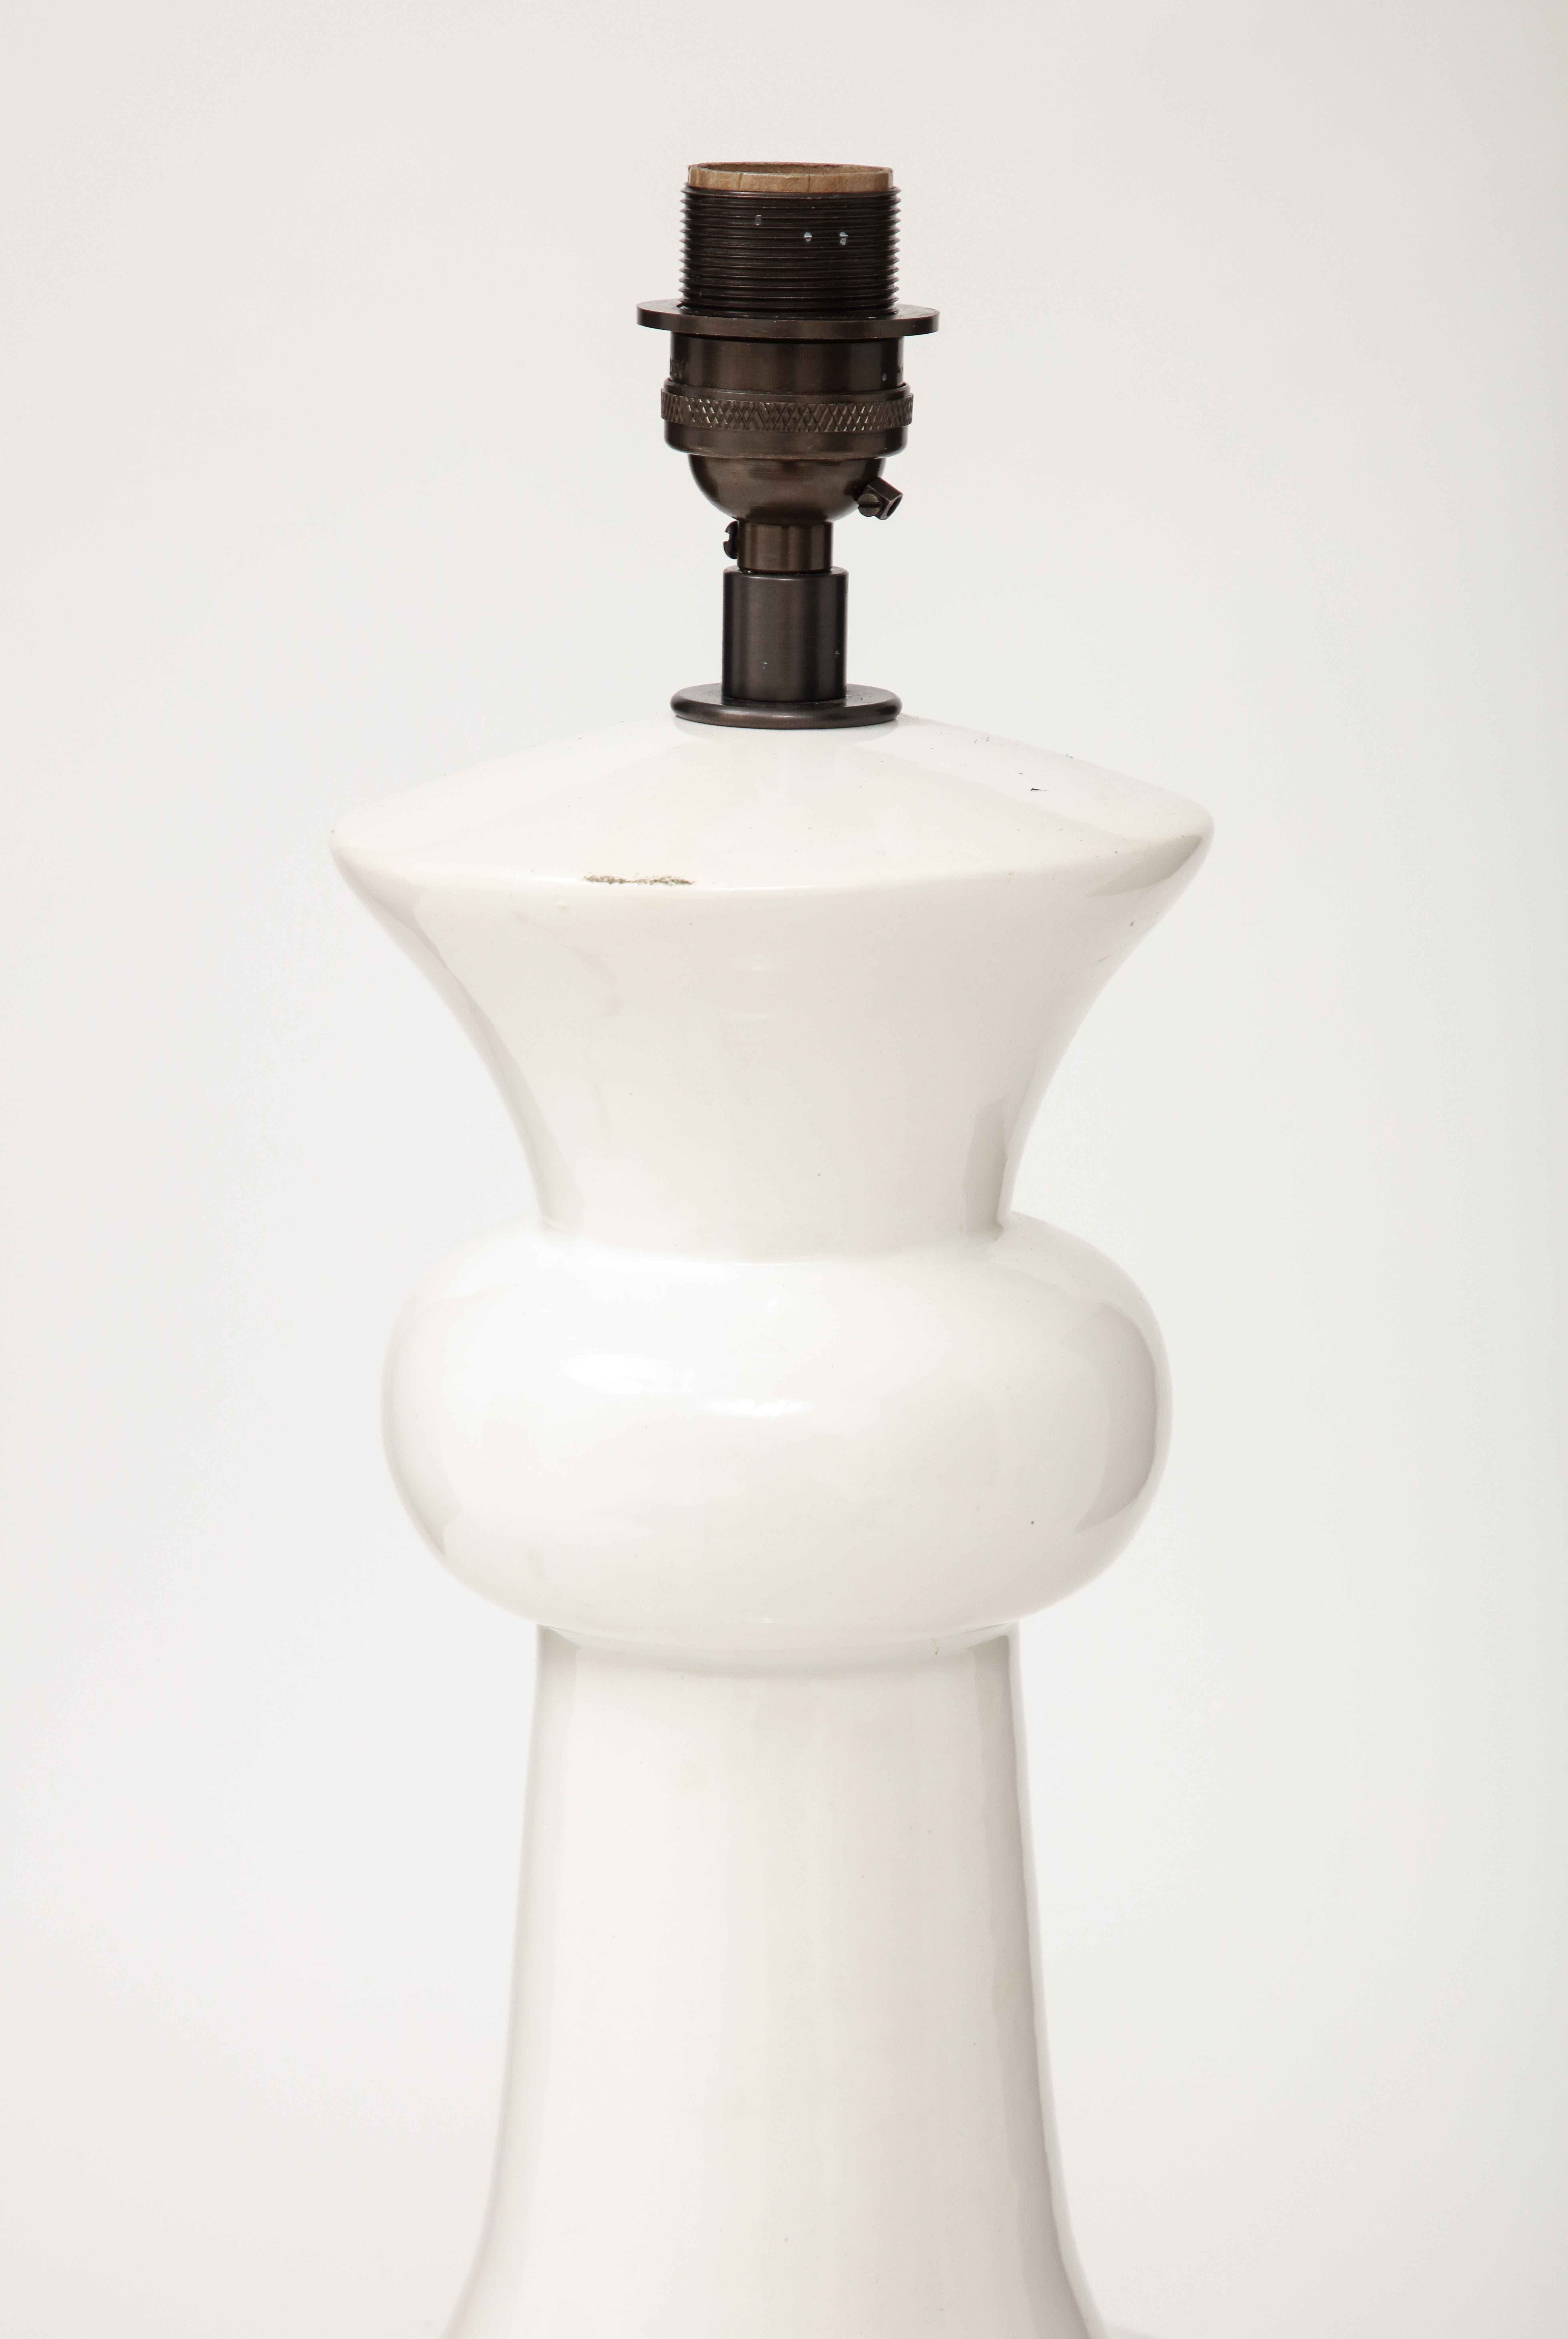 Large Scale Italian White Ceramic Lamp, 1960's For Sale 7